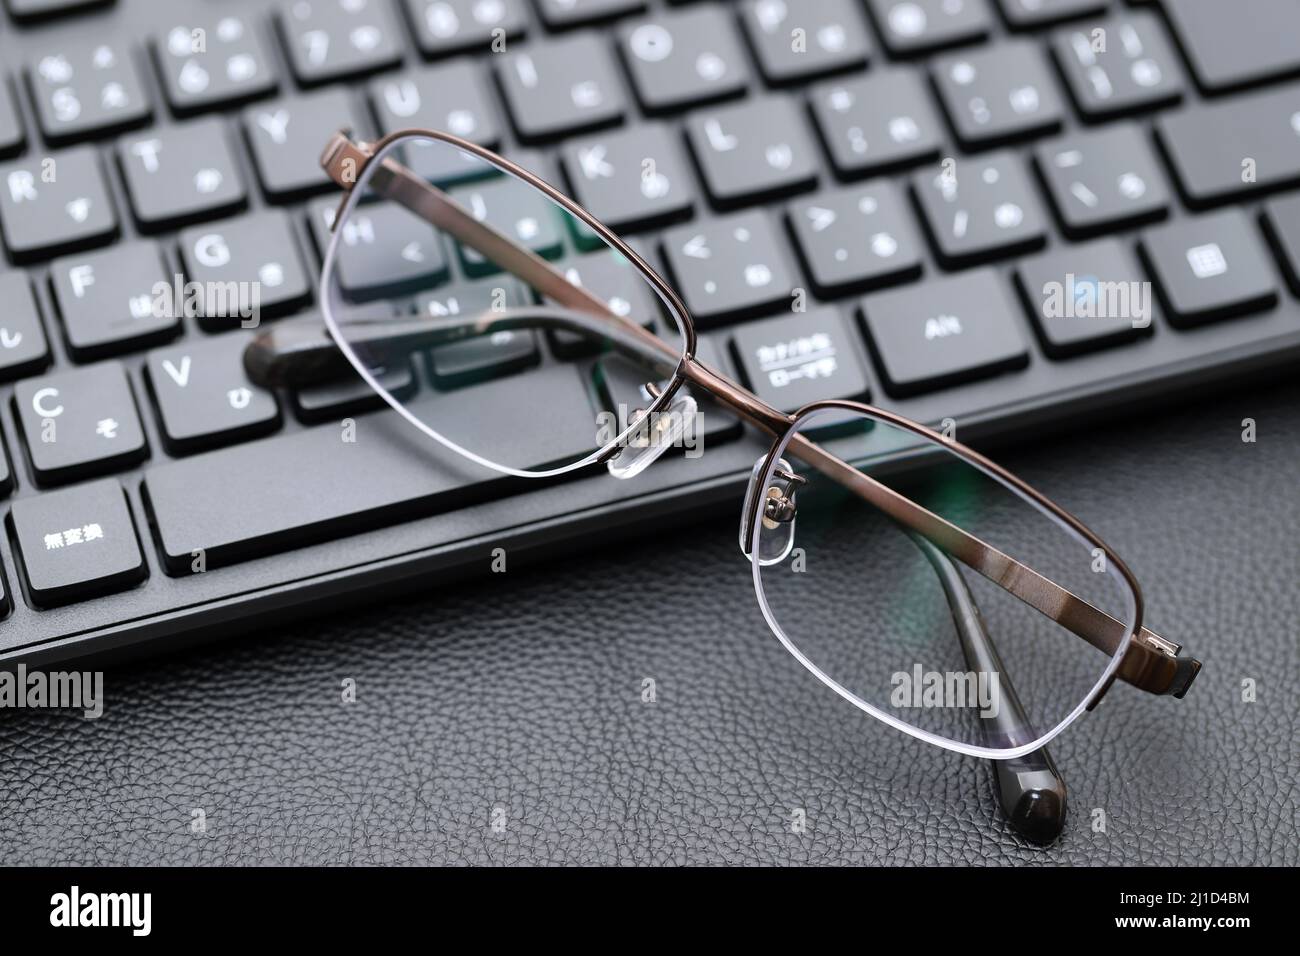 Stylish eyesight glasses with computer keyboard. Alphabetics and Japanese hiragana typing keyboard. Stock Photo